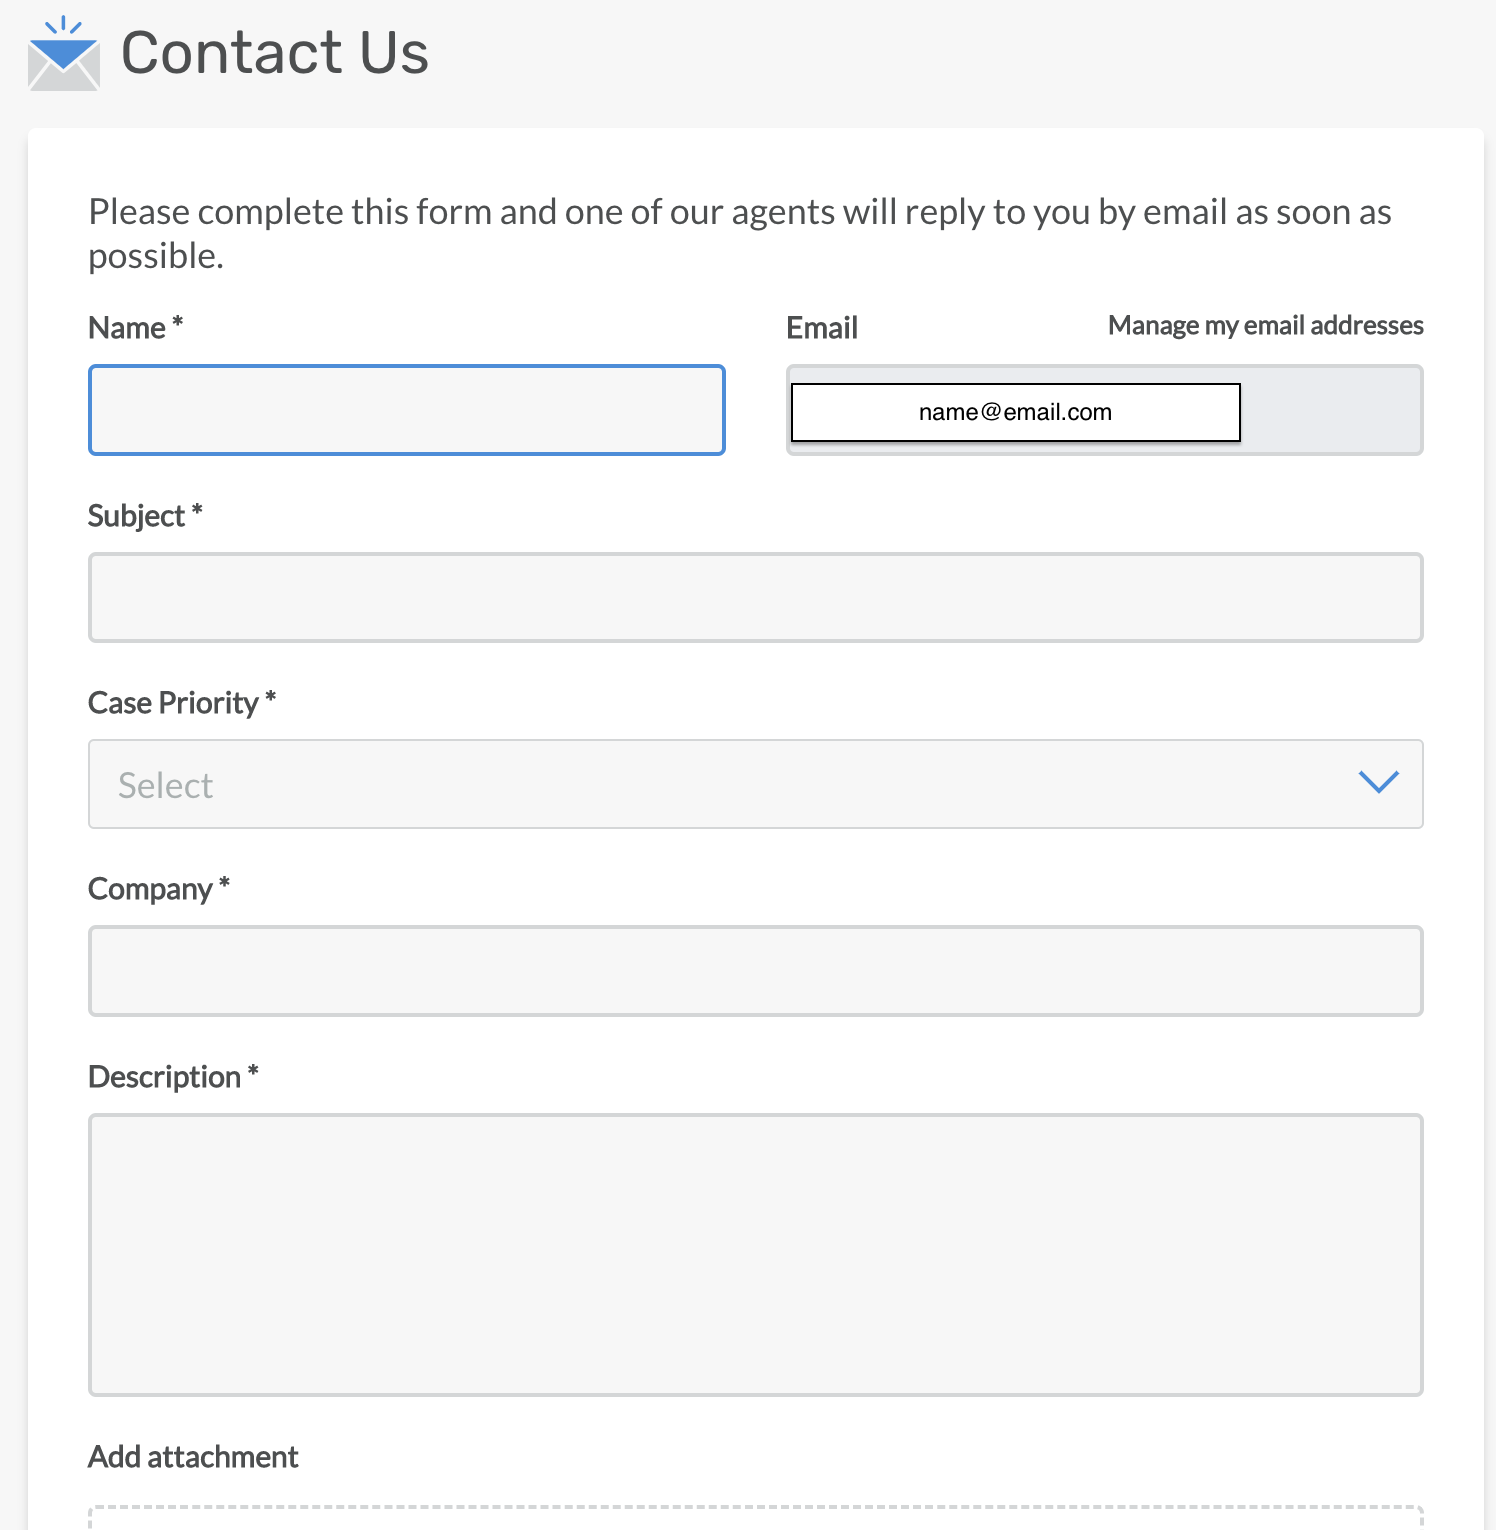 Support portal 'Contact Us' form